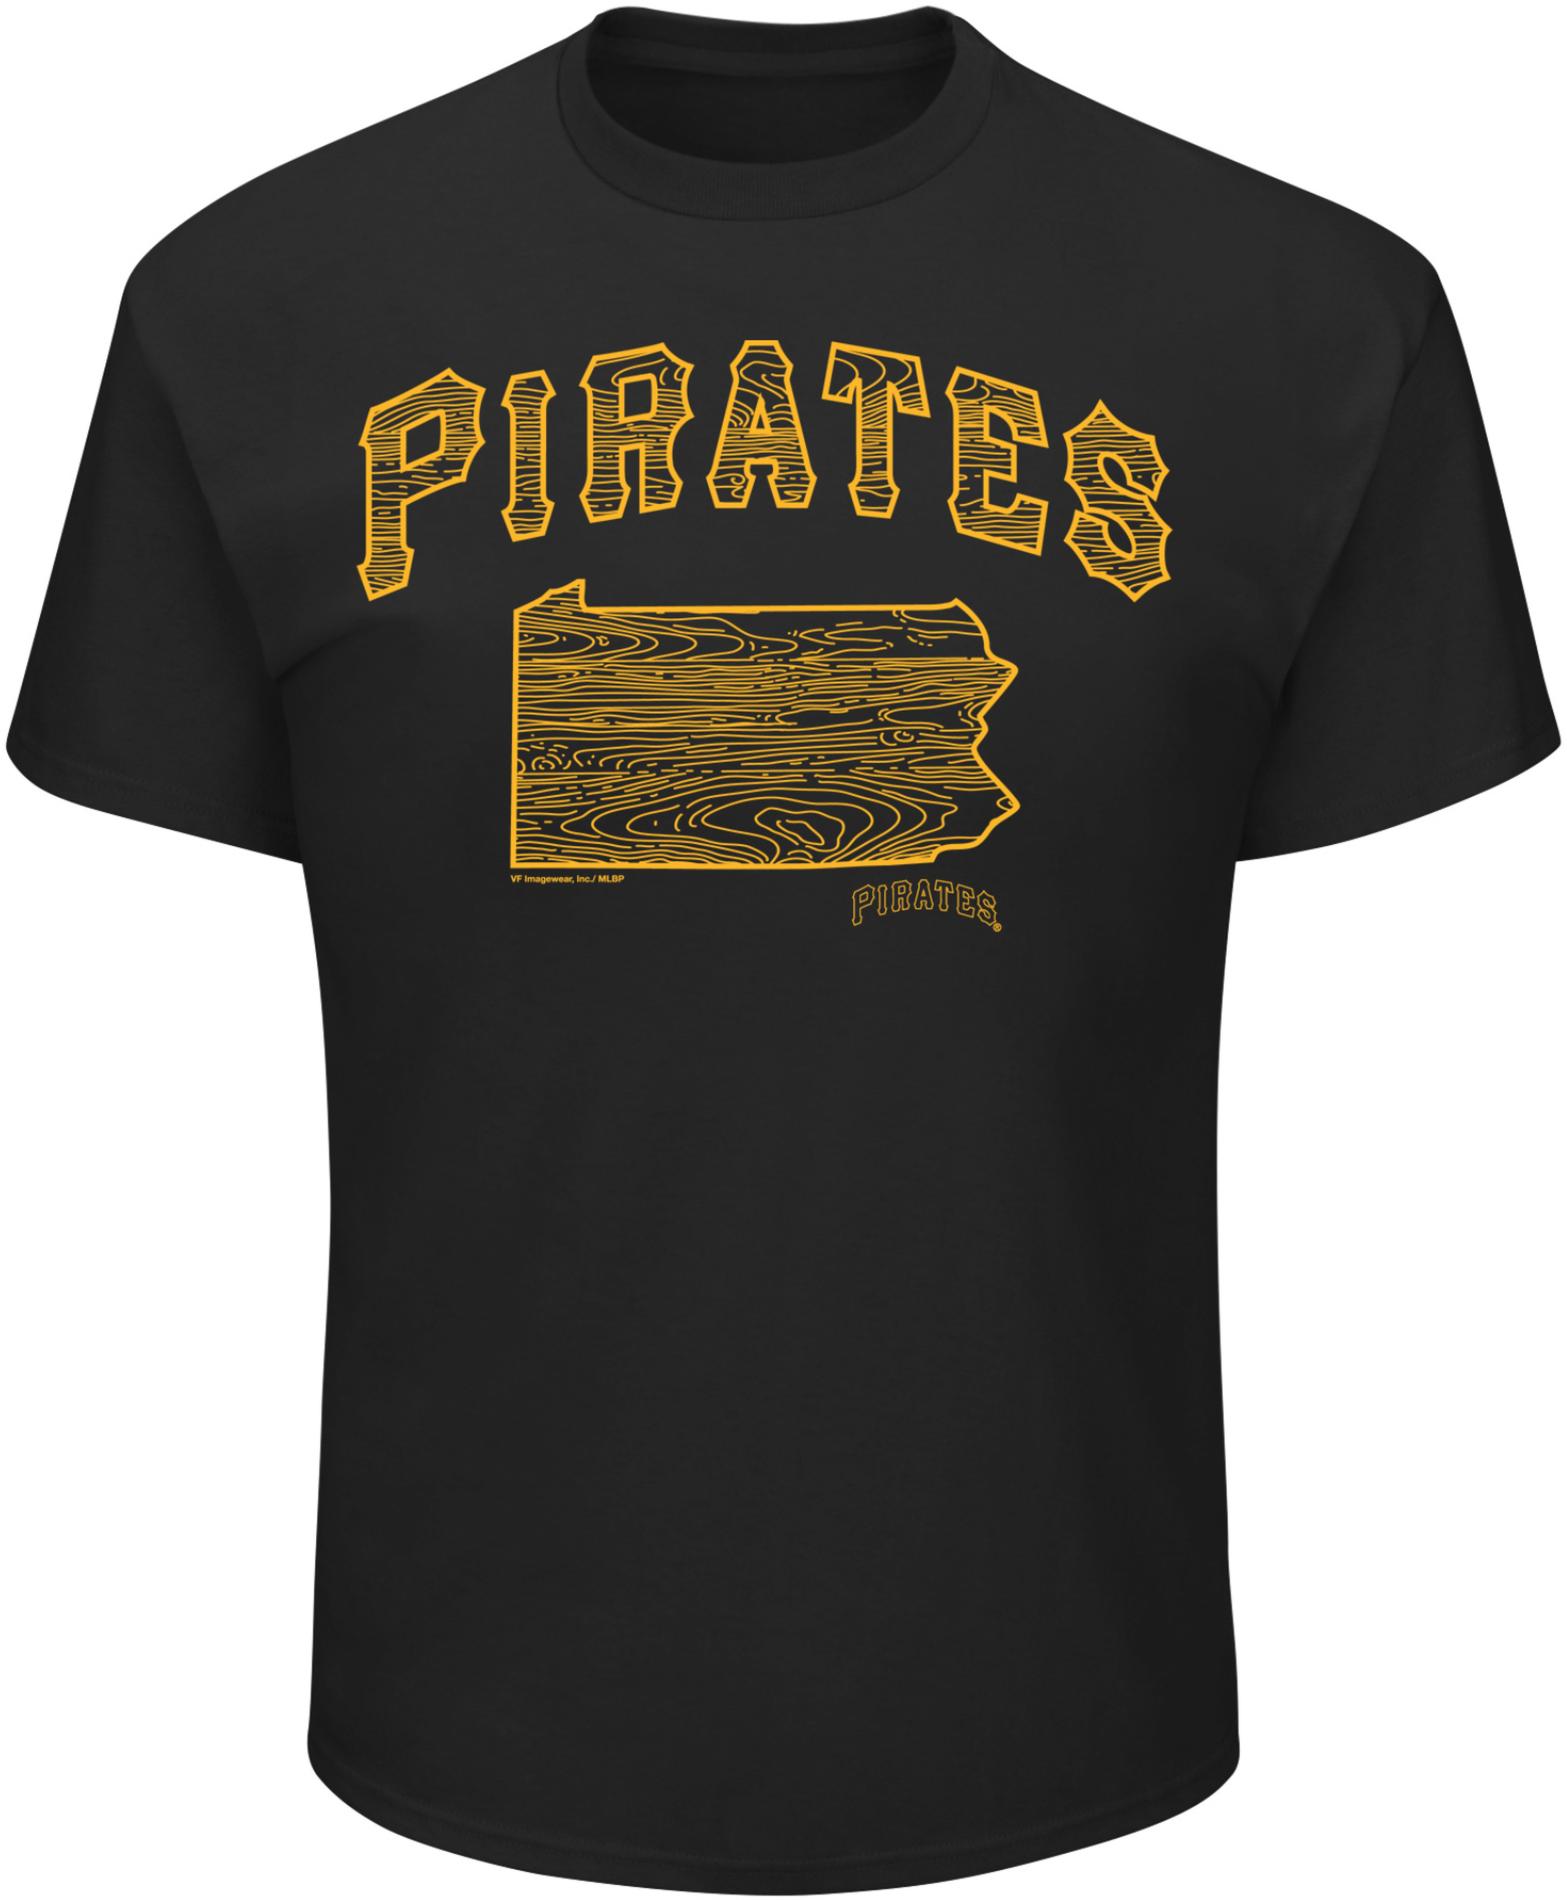 MLB Men's Graphic T-Shirt - Pittsburgh Pirates